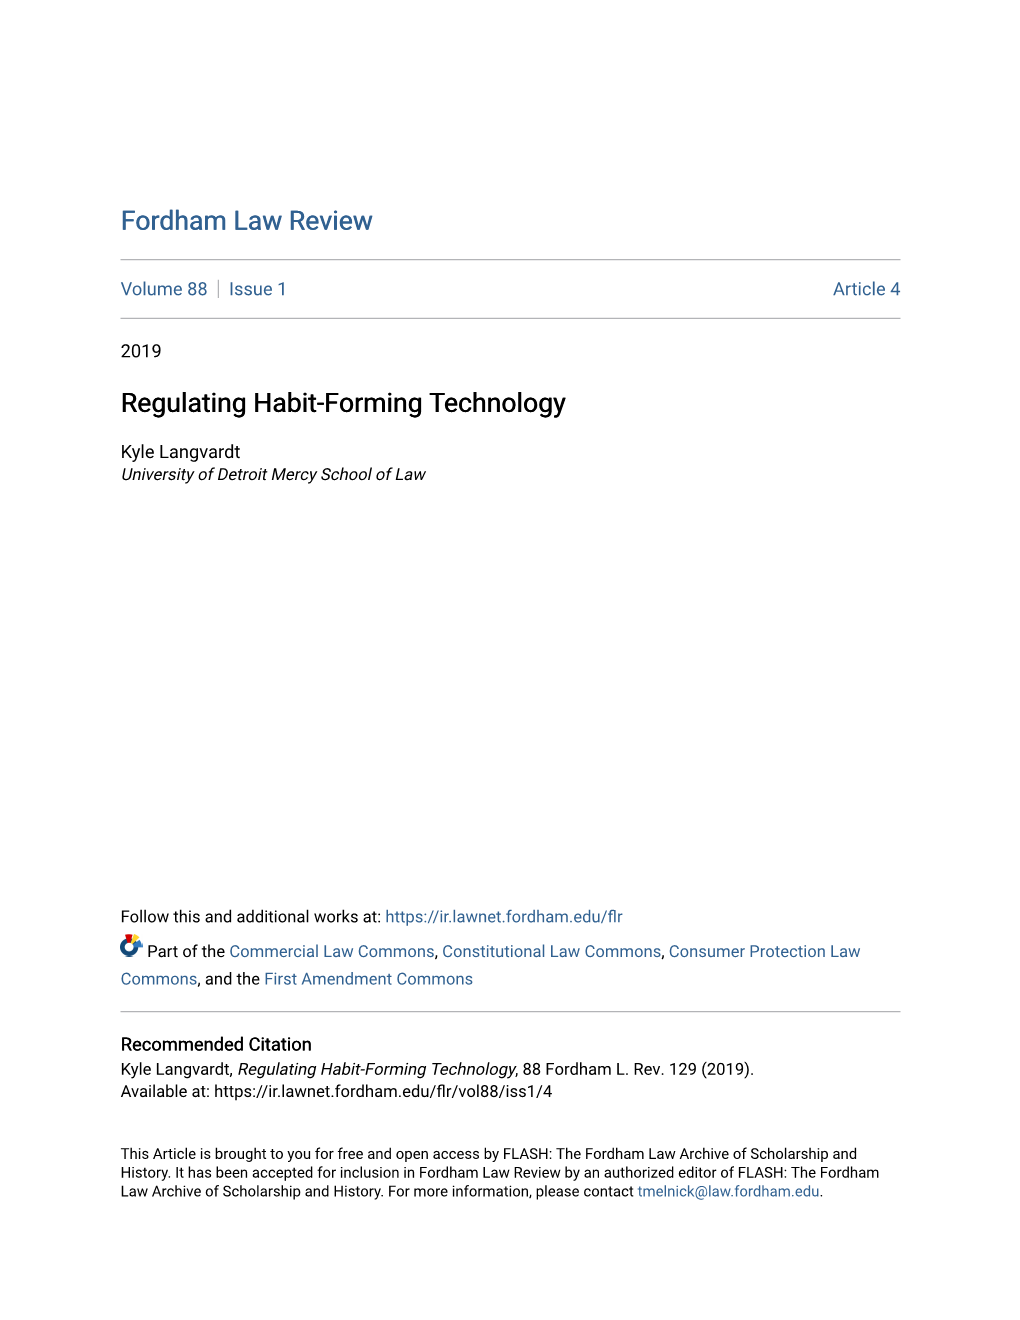 Regulating Habit-Forming Technology